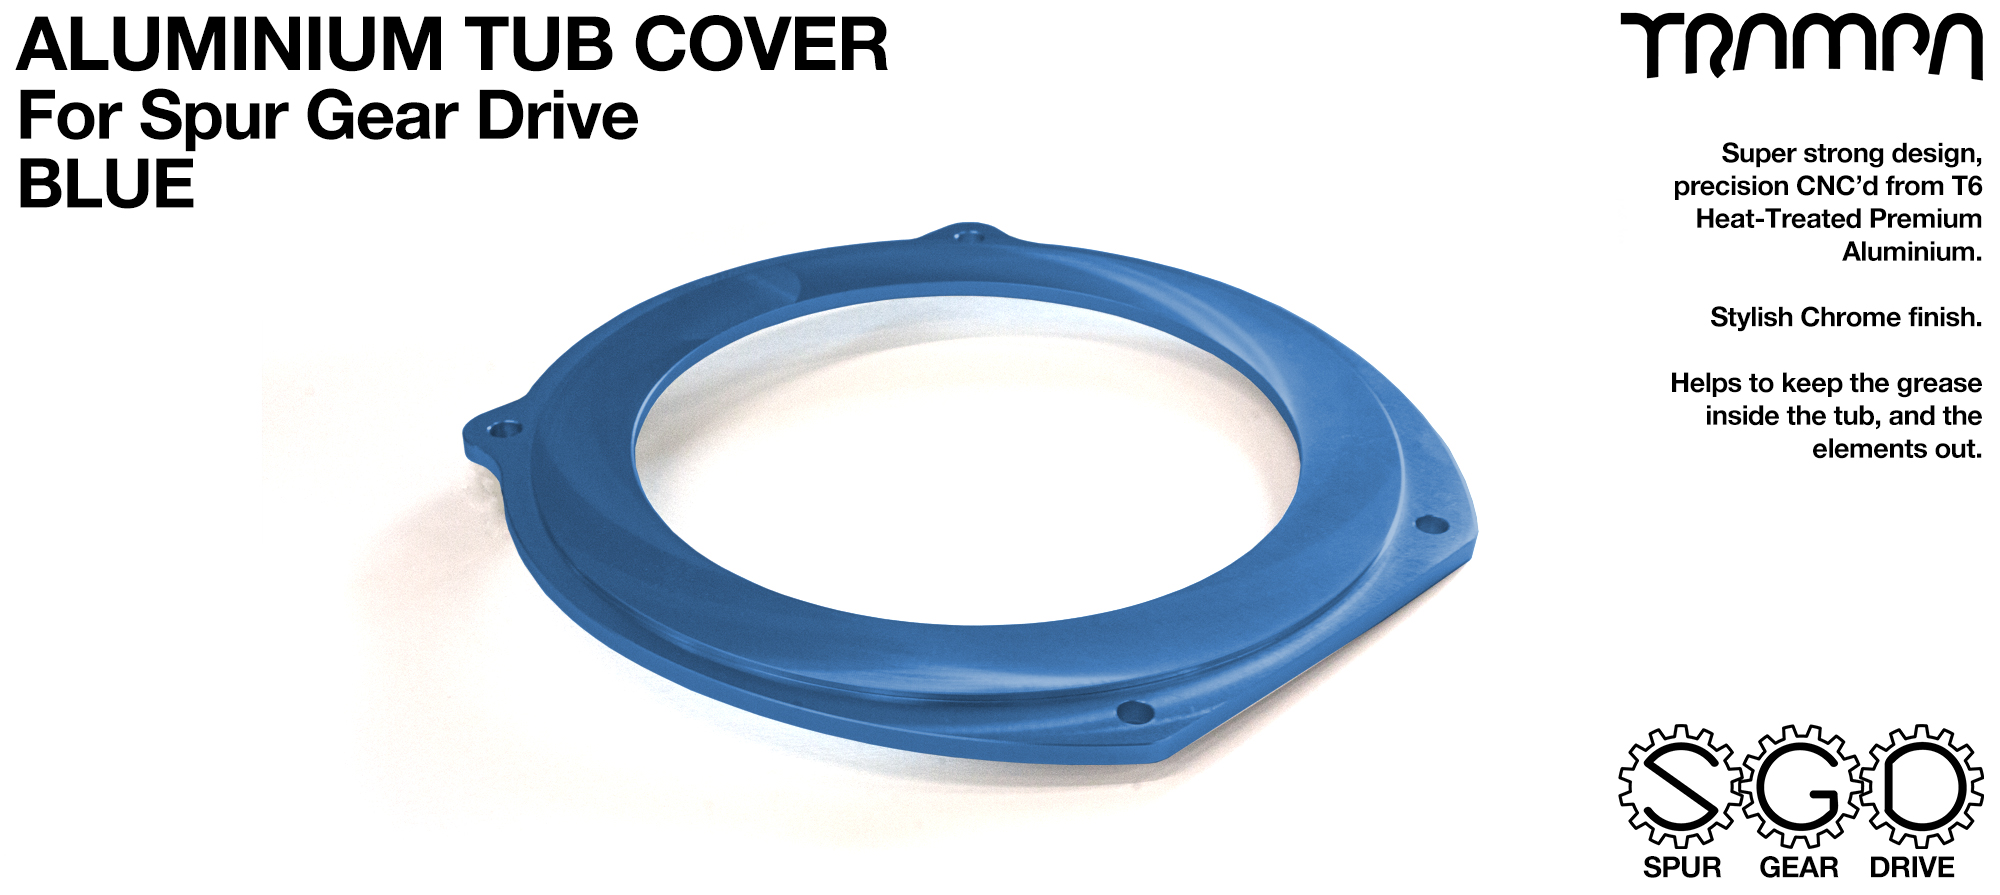 TRAMPA SPUR Gear Drive T6 Aluminium Tub Cover - BLUE